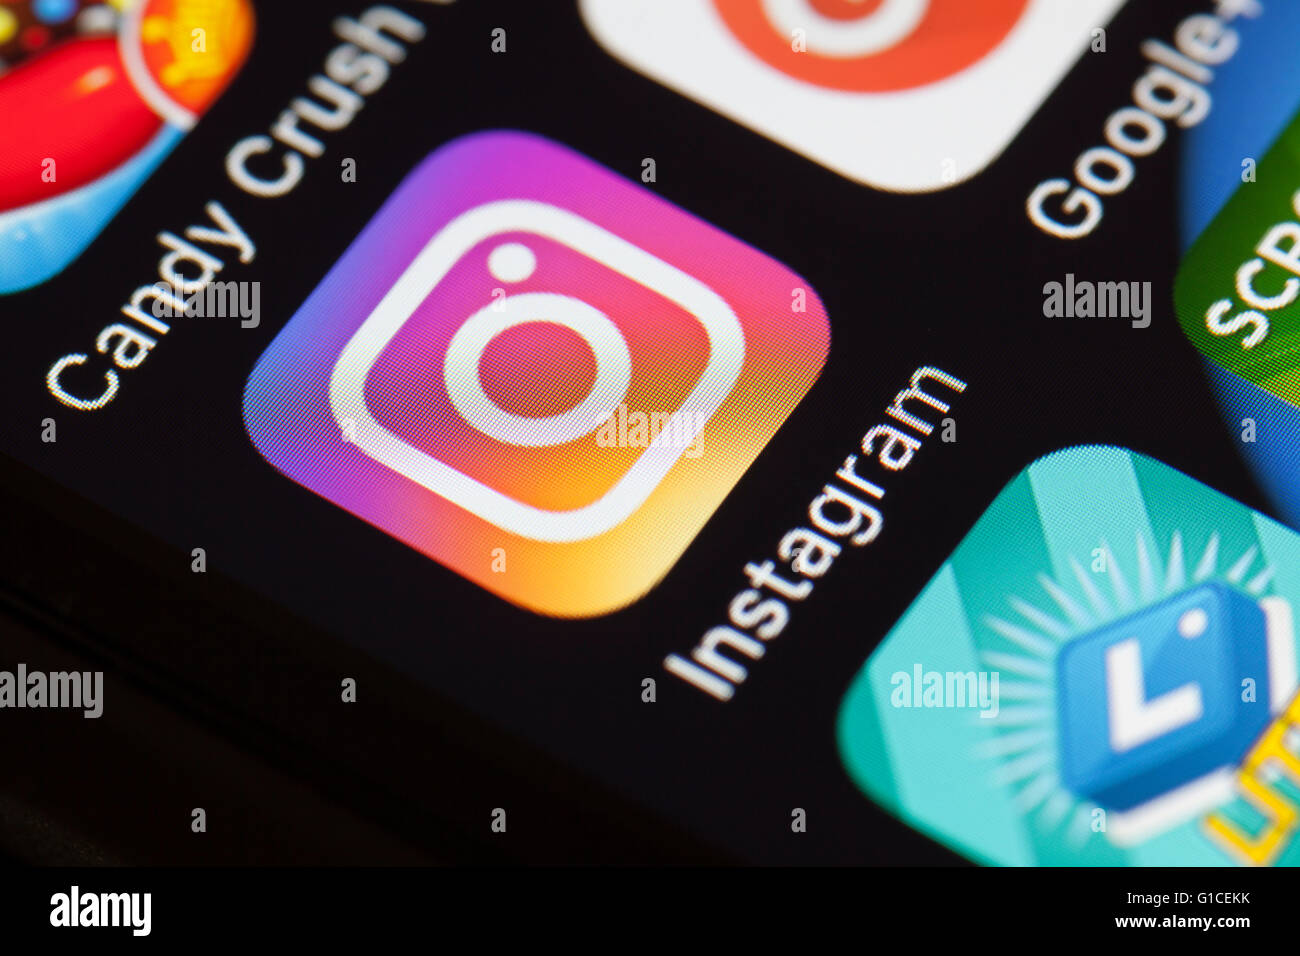 New Instagram app icon on mobile phone. Stock Photo